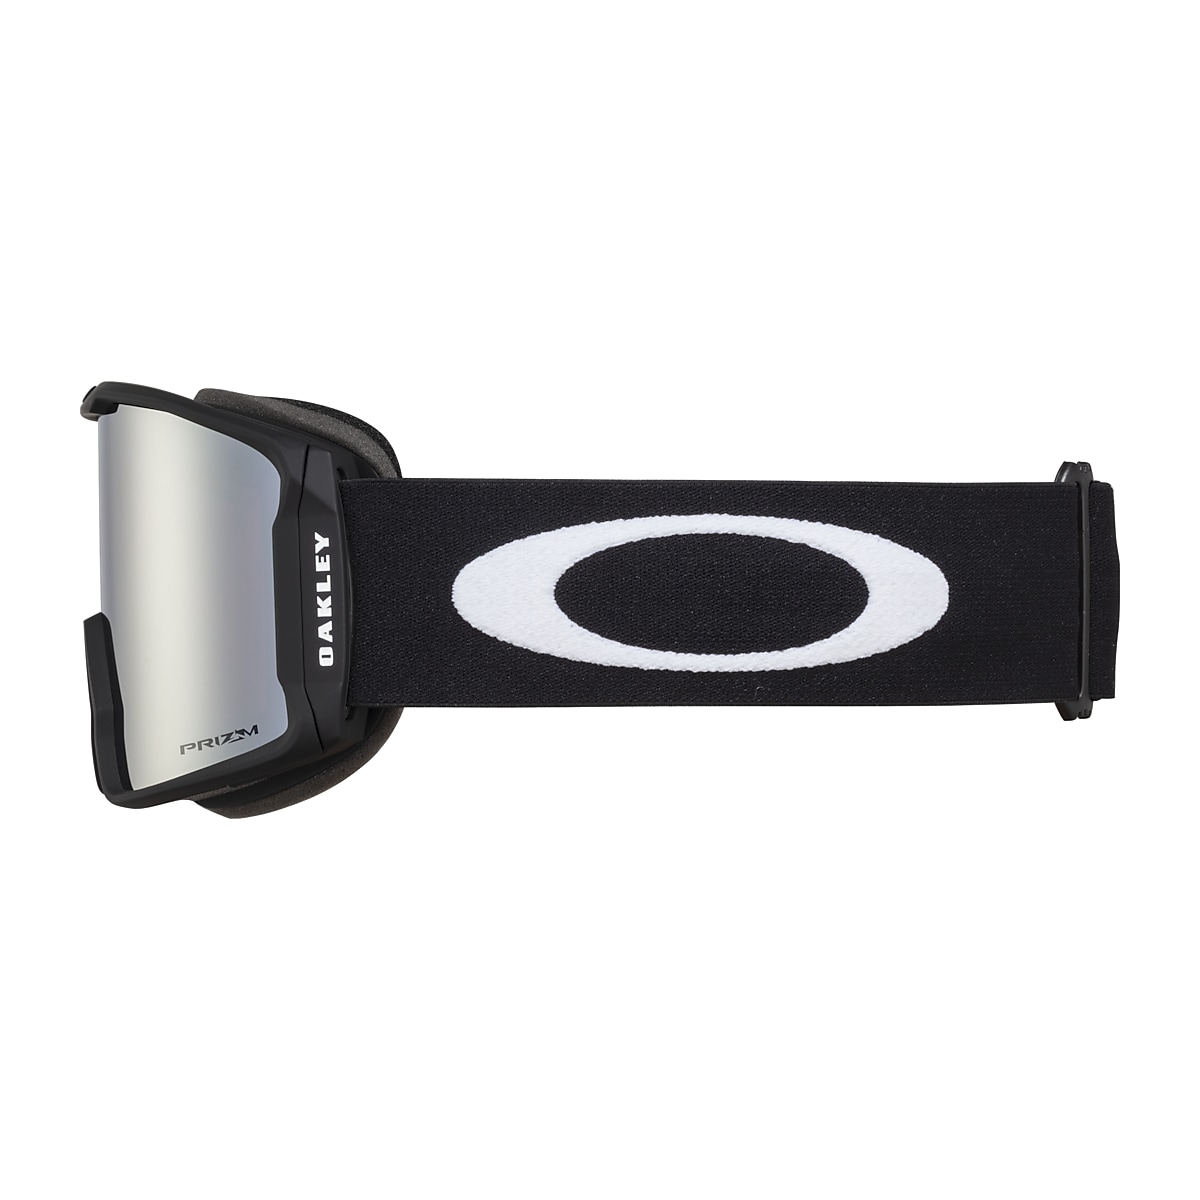 Oakley Line Miner™ L Snow Goggles - Matte Black - Prizm Snow Black Iridium  - OO7070-01 | Oakley JP Store